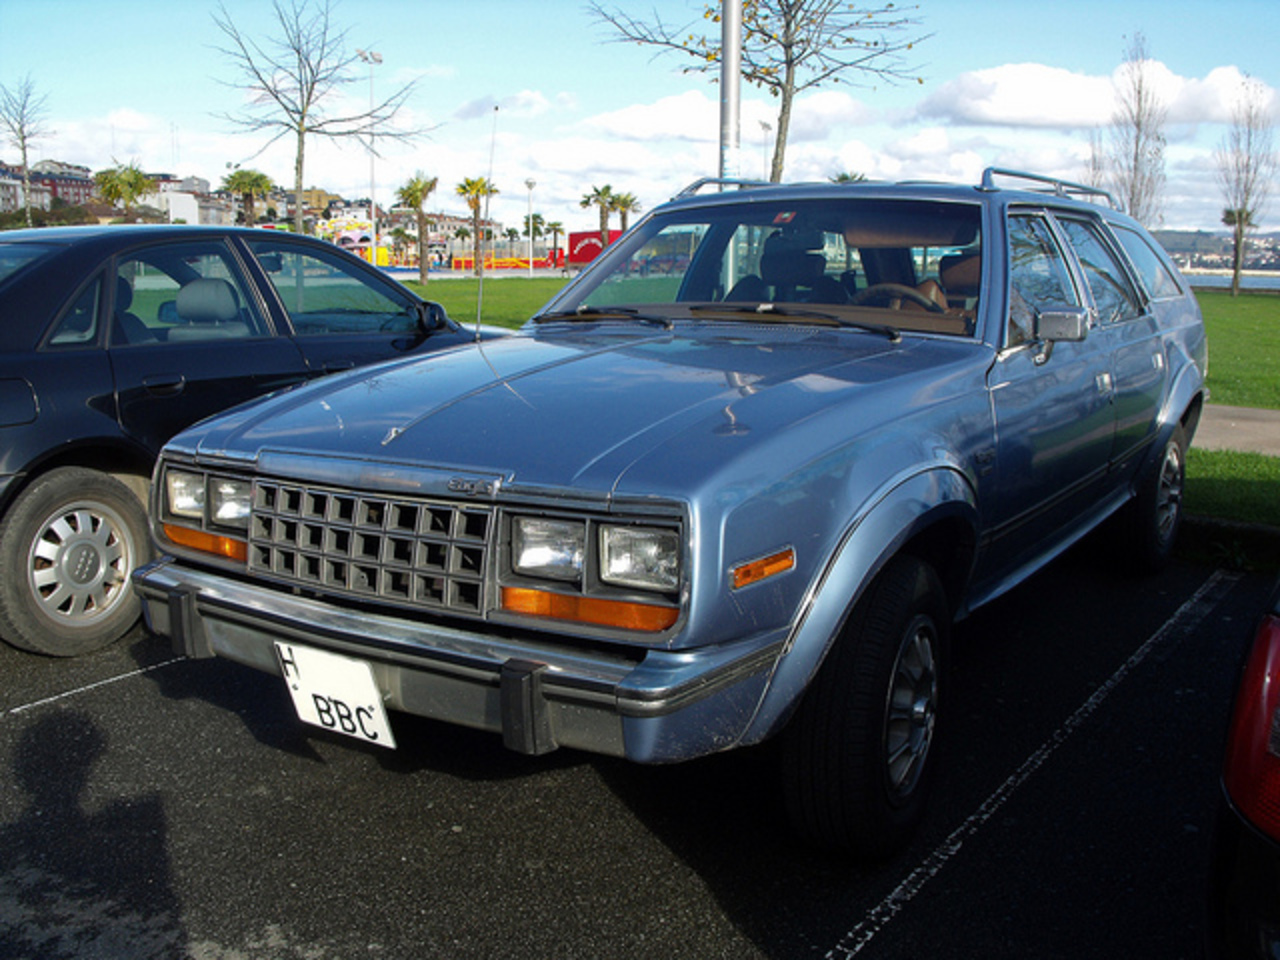 1981 AMC Eagle Wagon 4WD | Flickr - Photo Sharing!